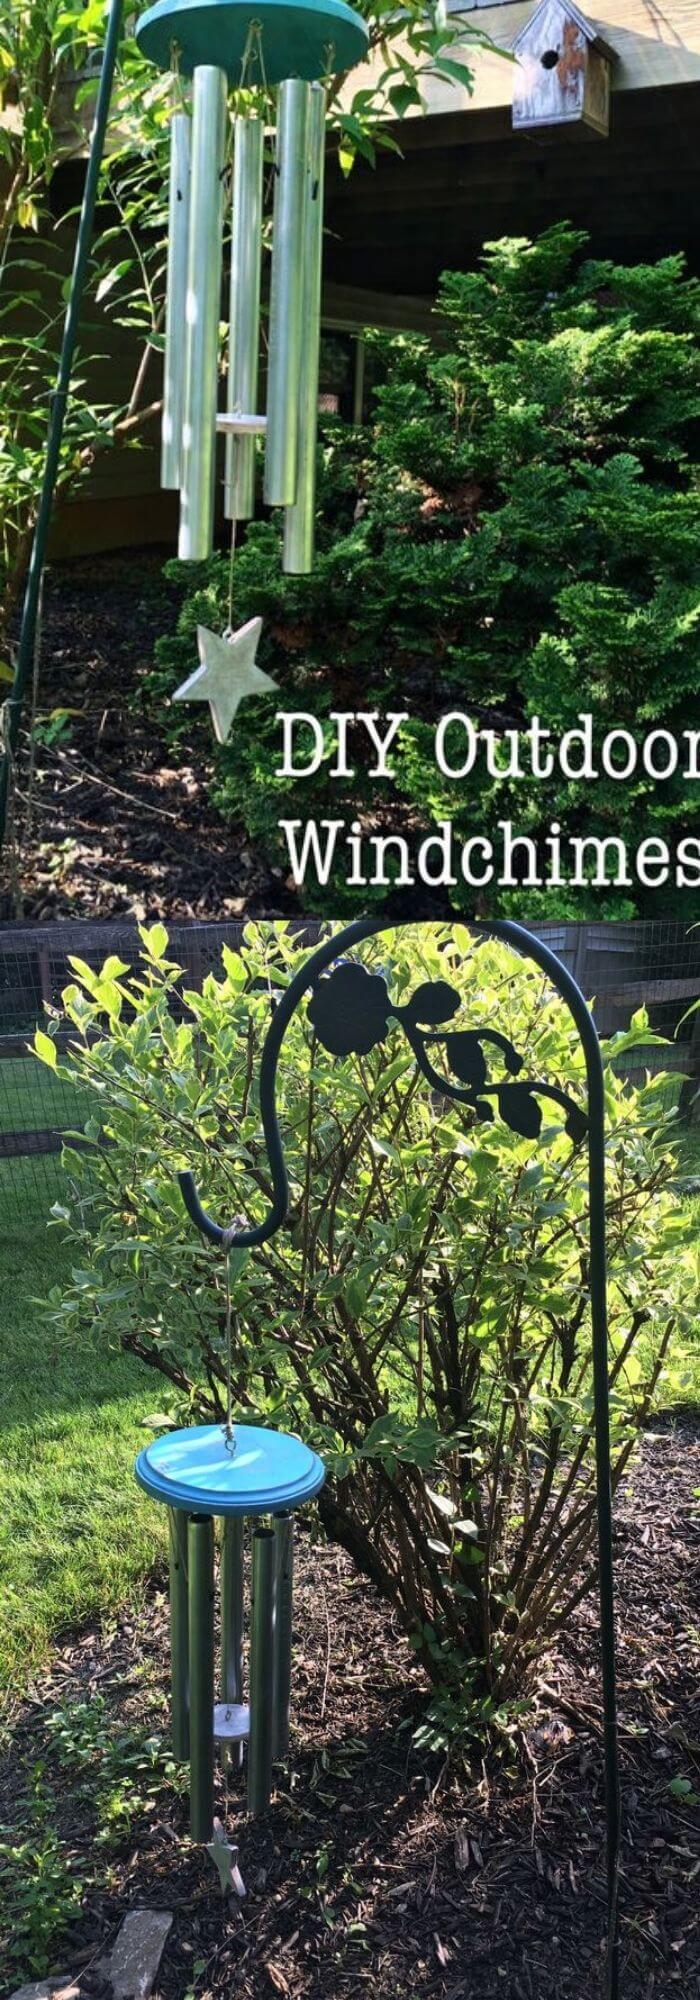 Backyard DIY Wind Chime